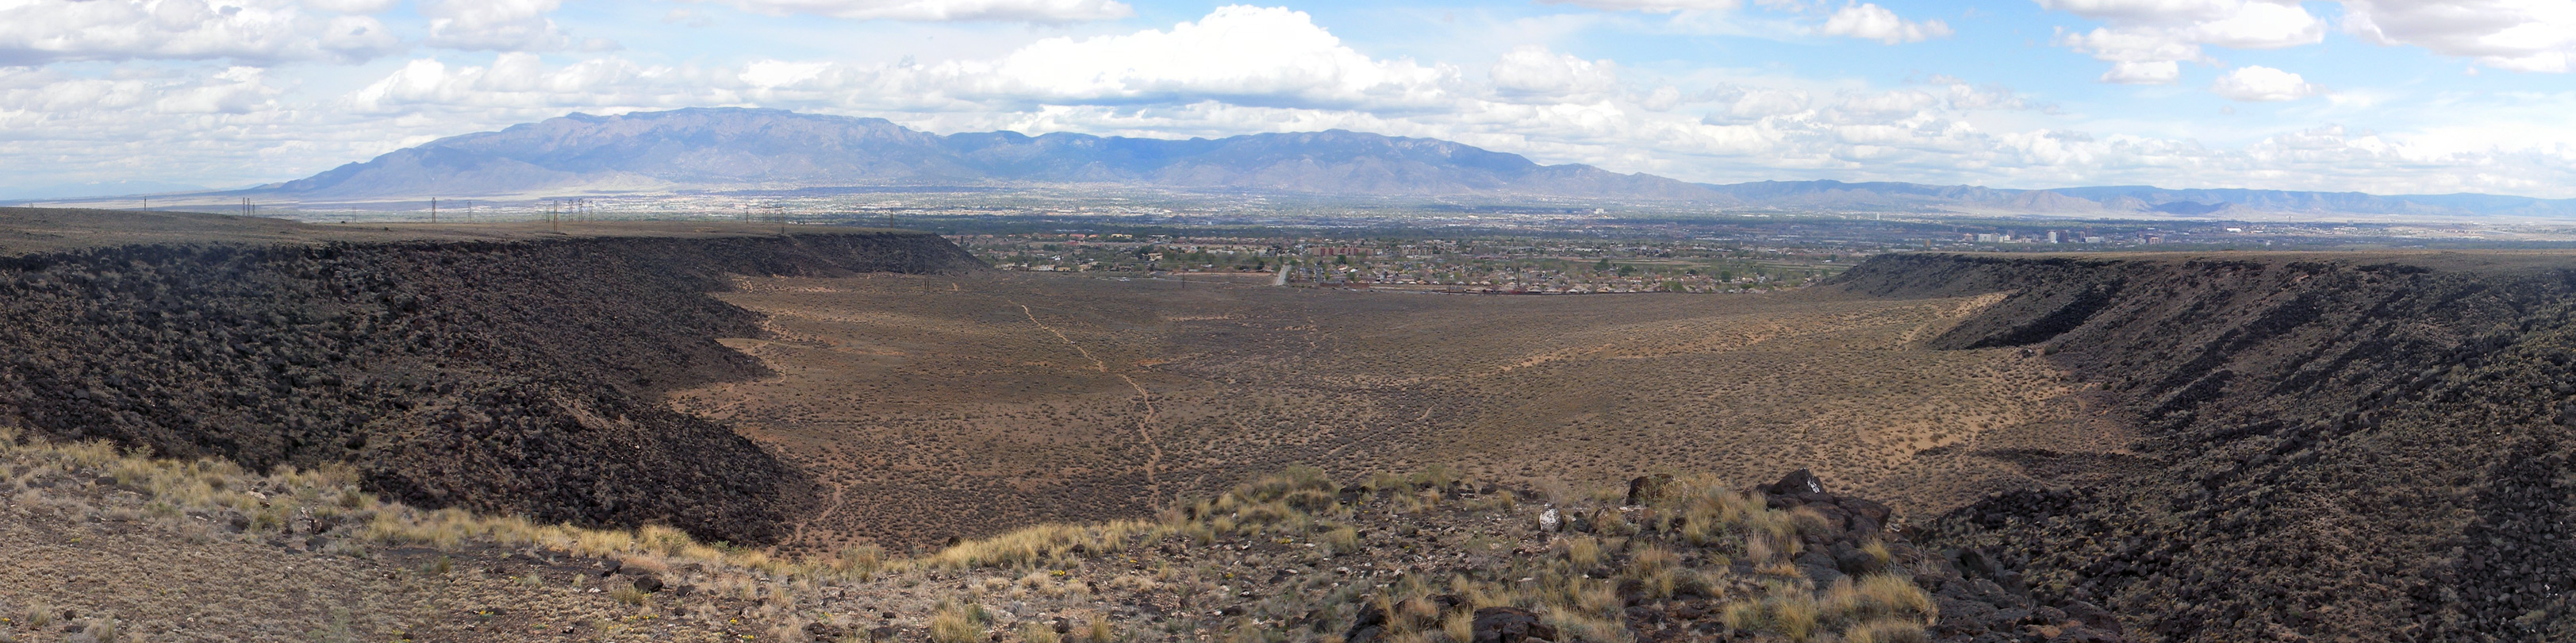 Distant view of Albuquerque